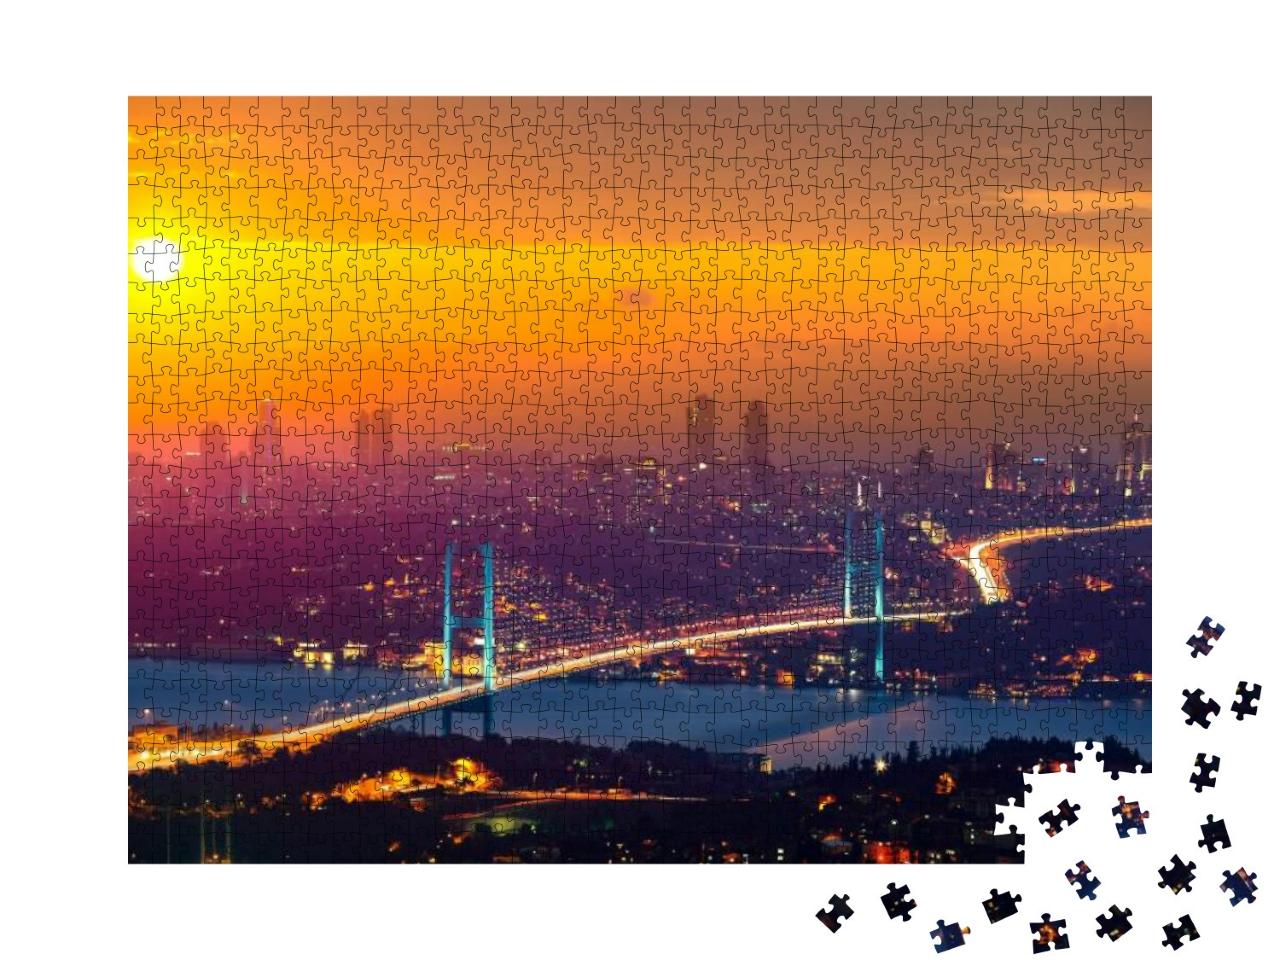 Puzzle 1000 Teile „Atemberaubender Sonnenuntergang über Istanbul, Türkei“